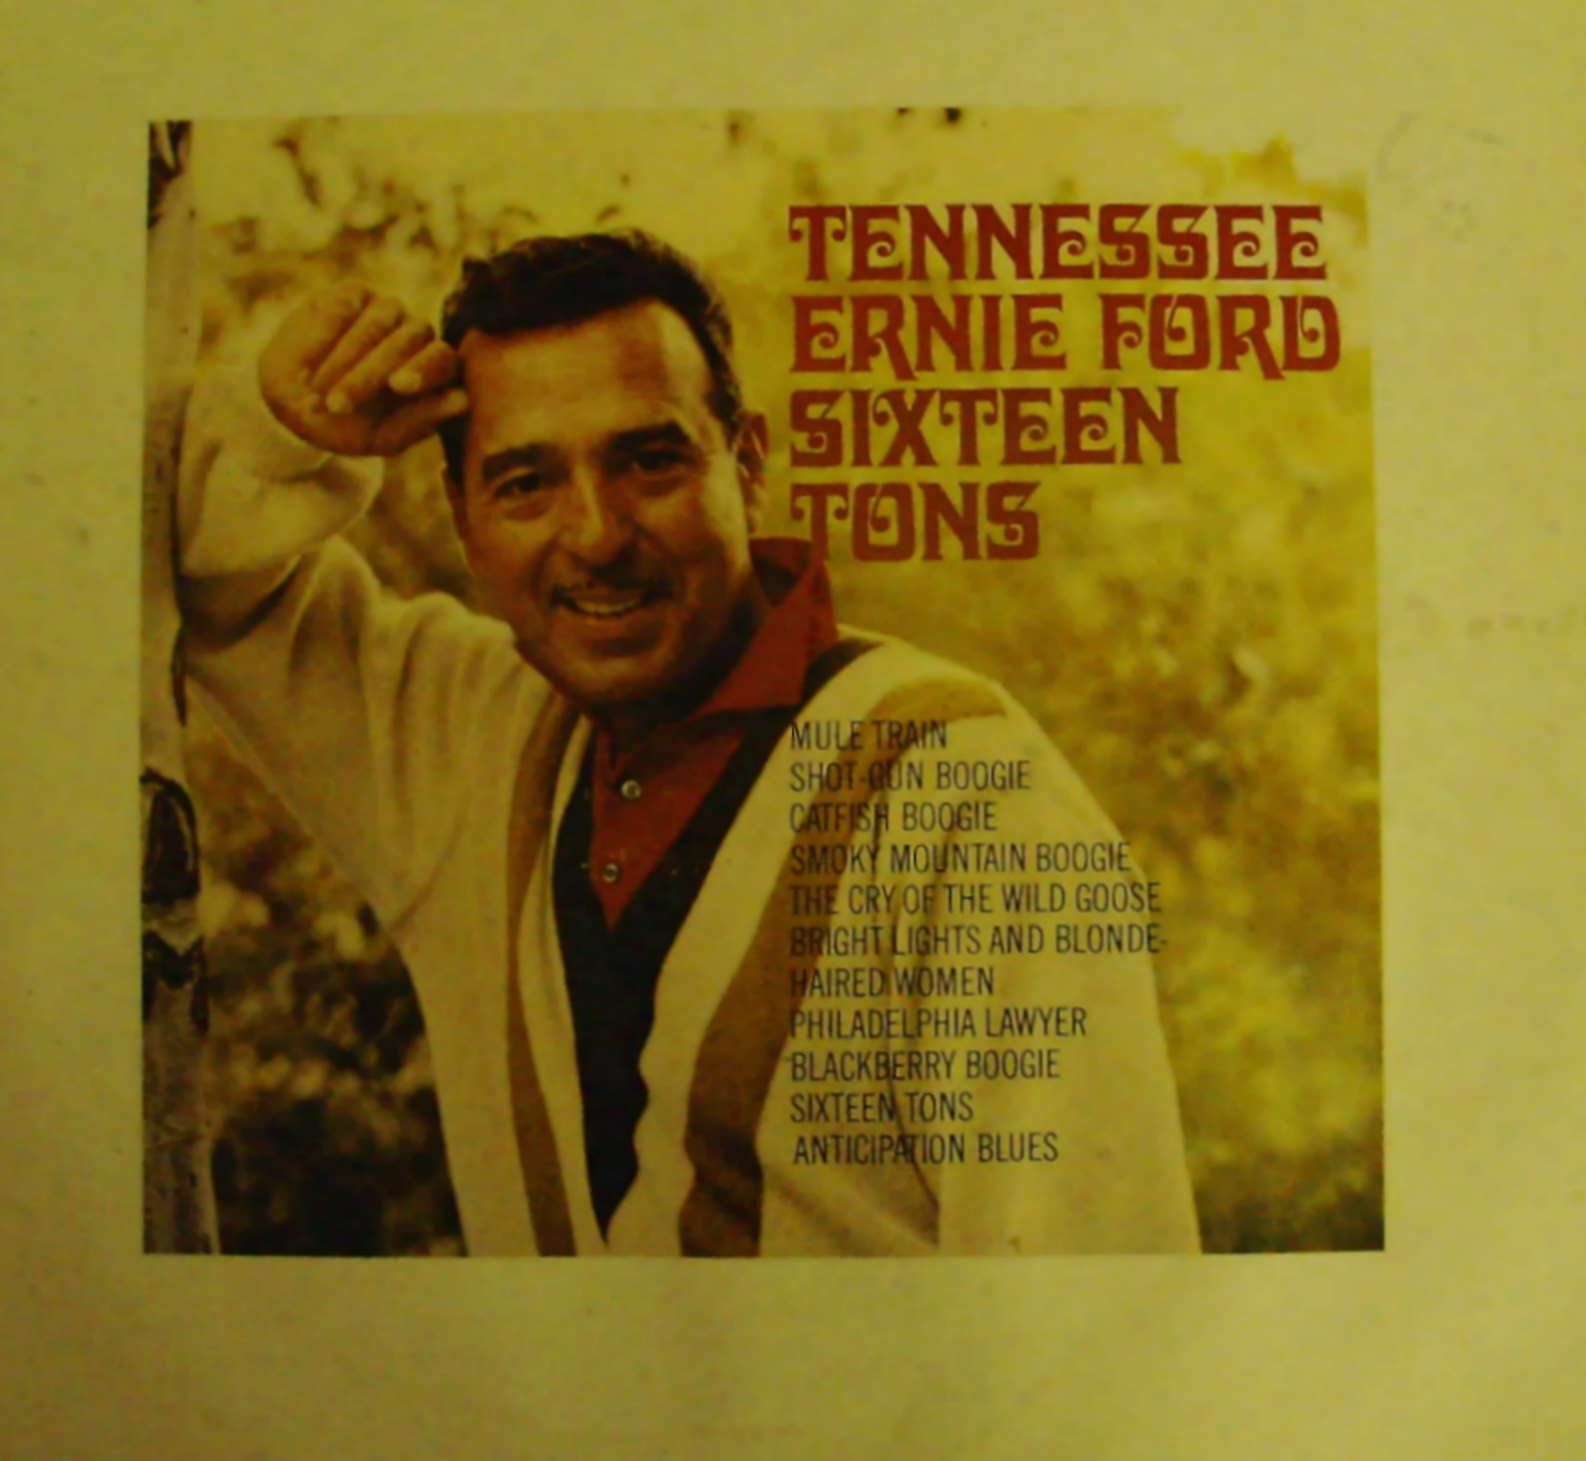 Tennessee ernie ford sixteen tons karaoke